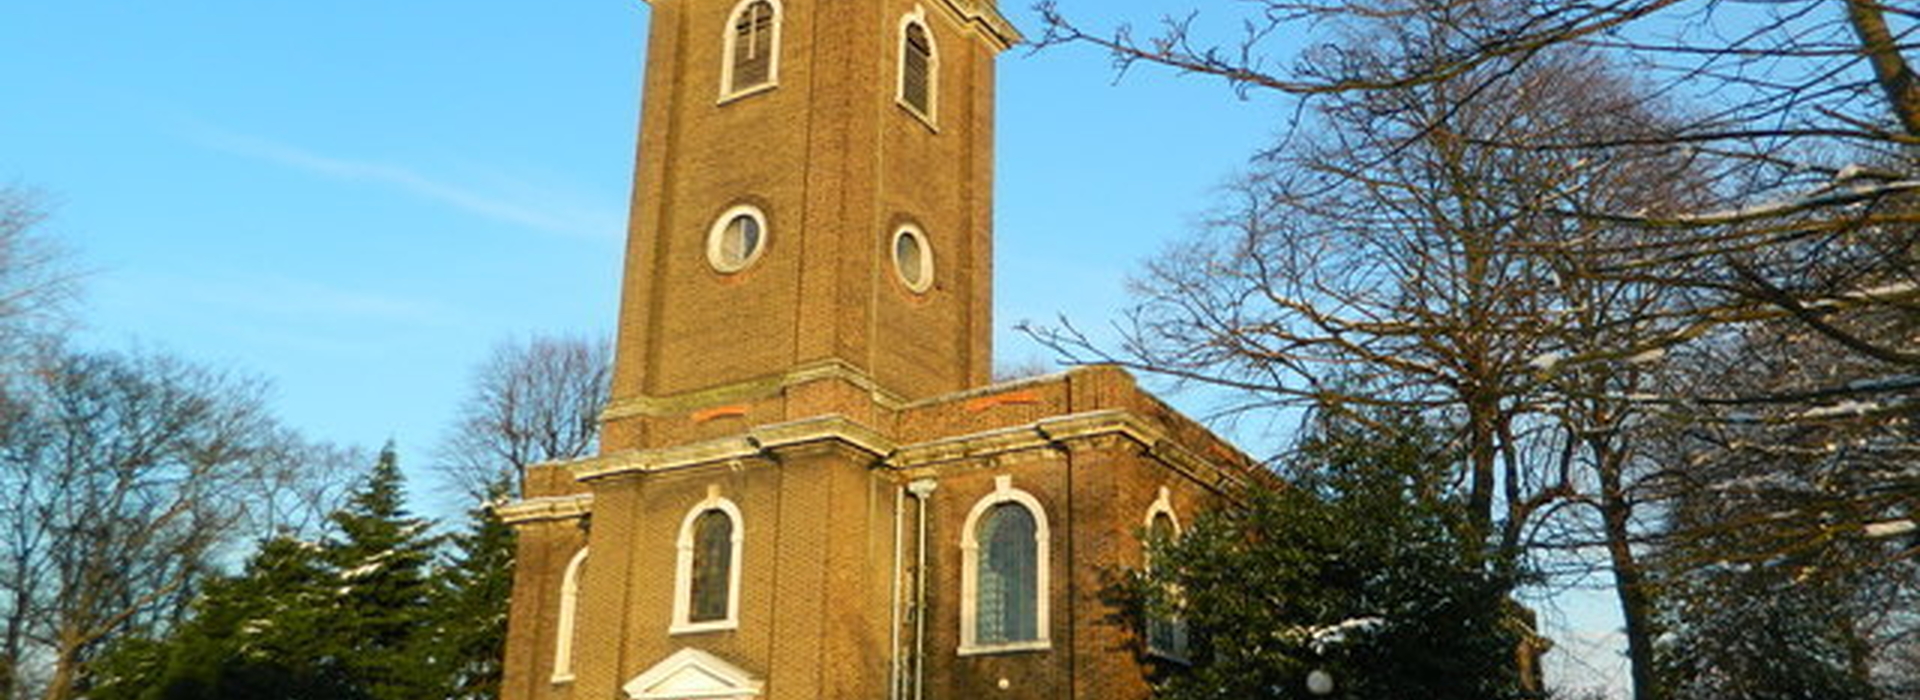 St.Mary Magdalene Church, Woolwich hero photo